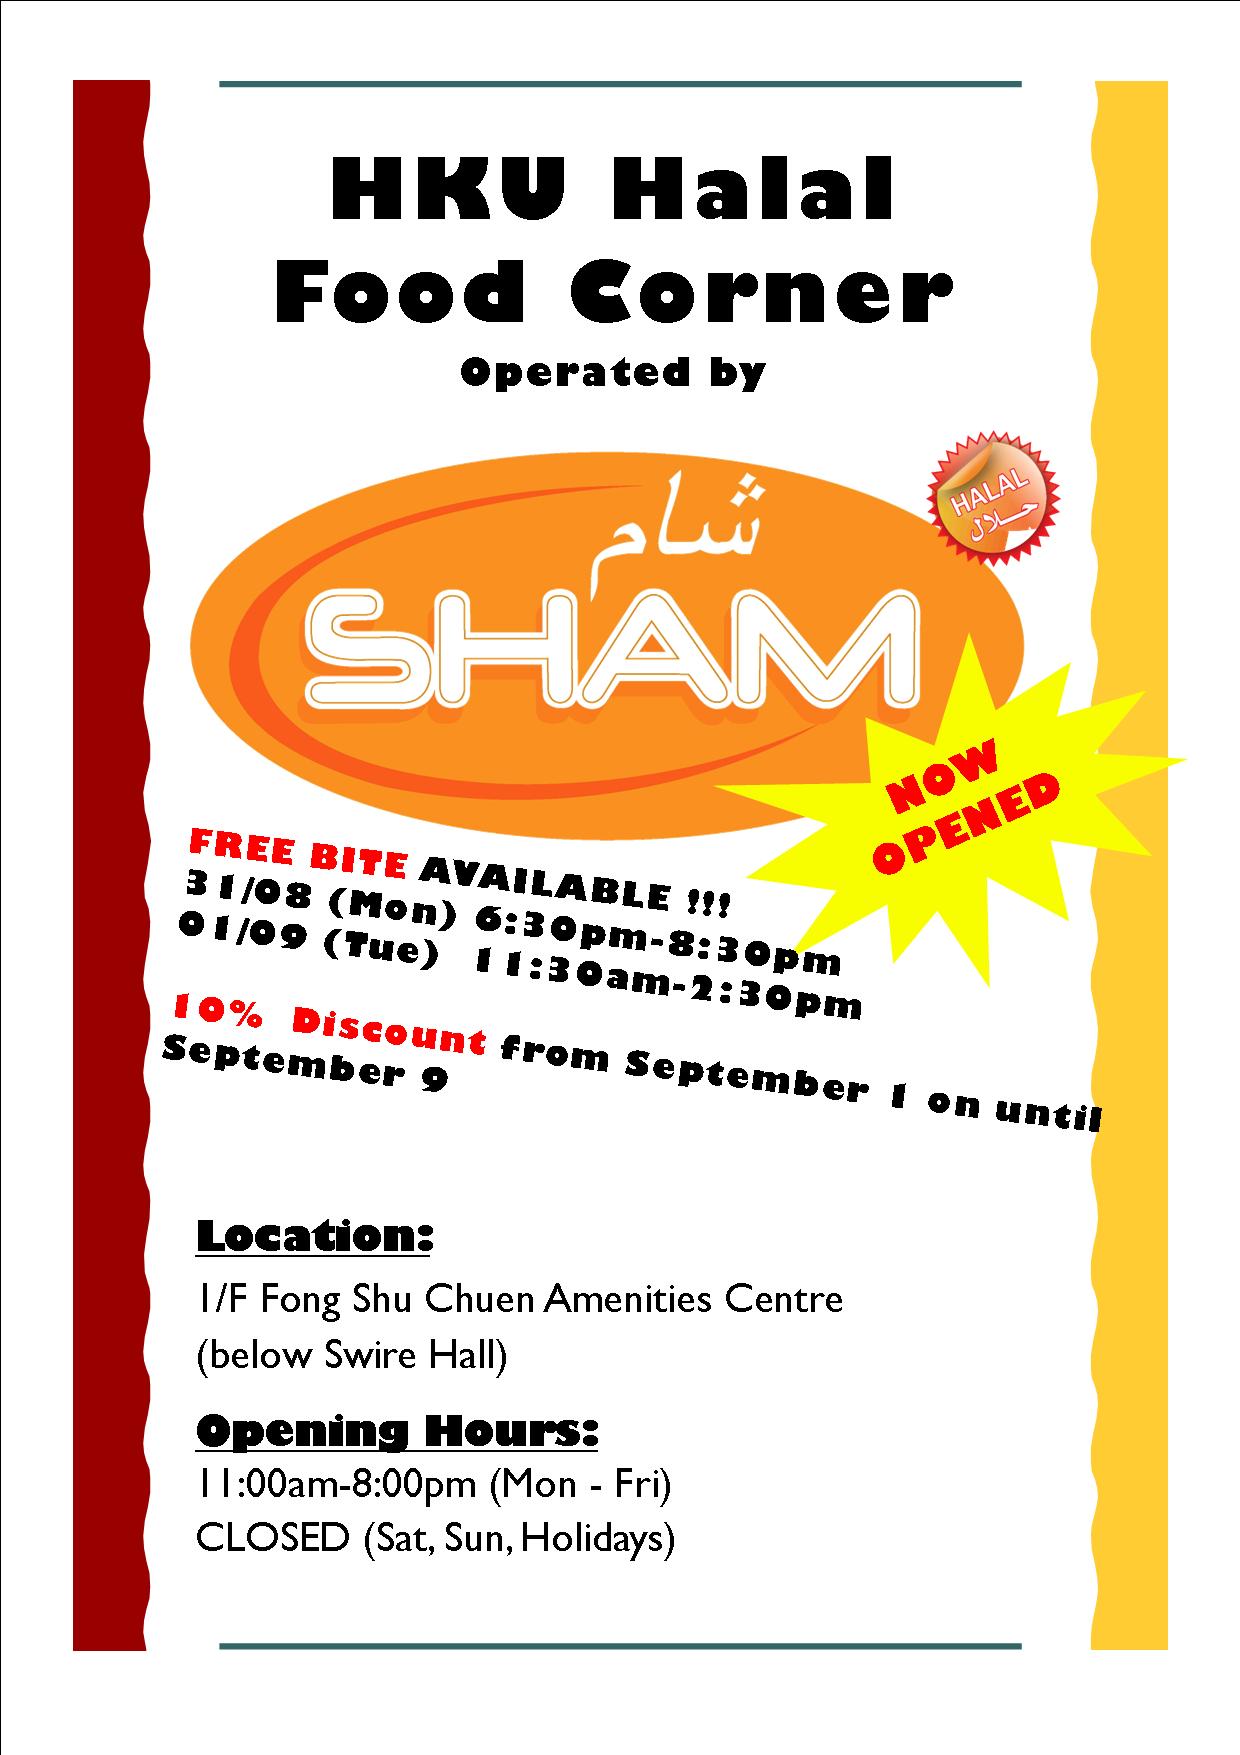 Opening of new Halal Food Corner